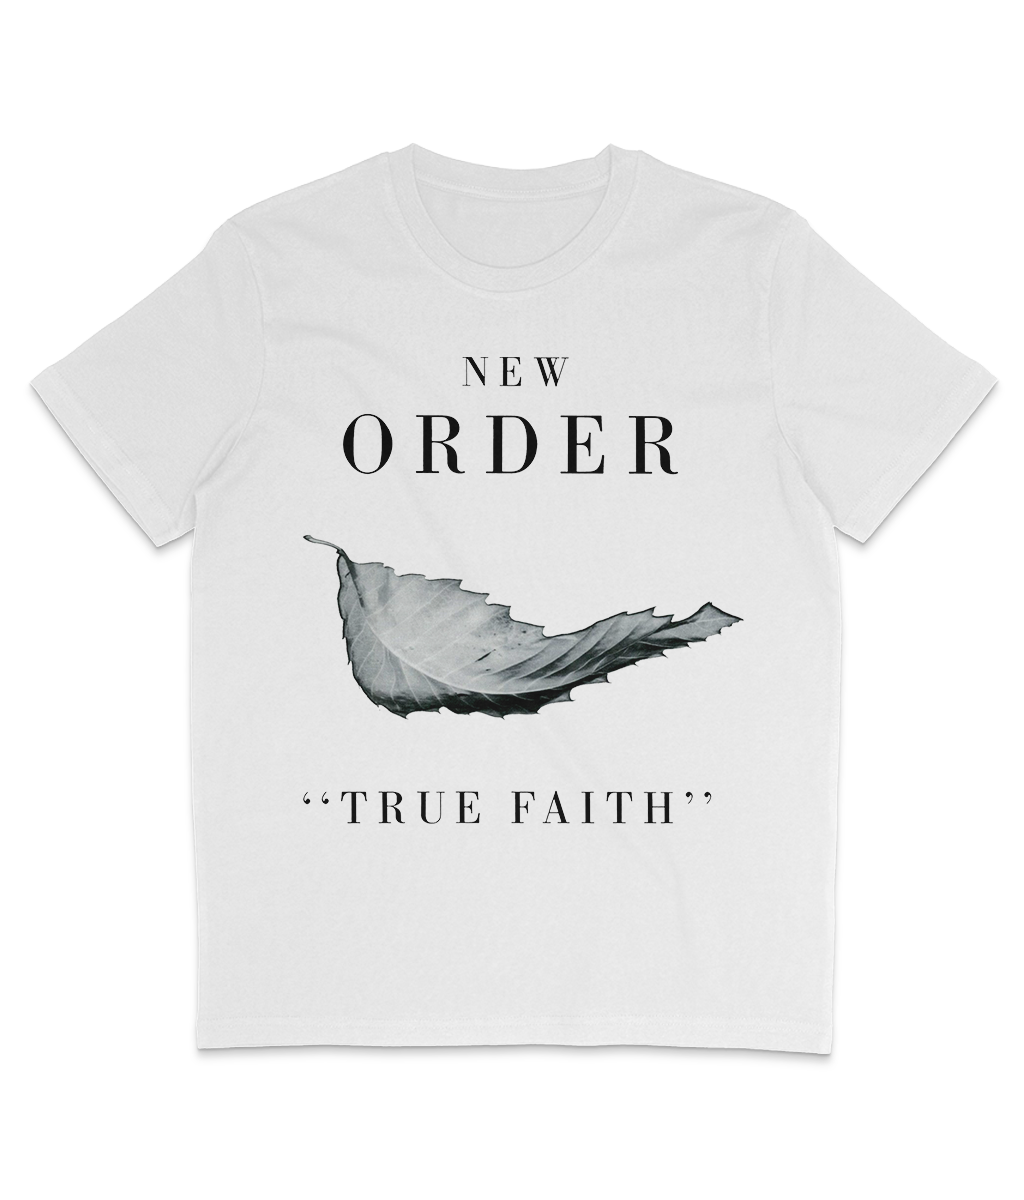 New Order - True Faith - 1987 - Monochrome